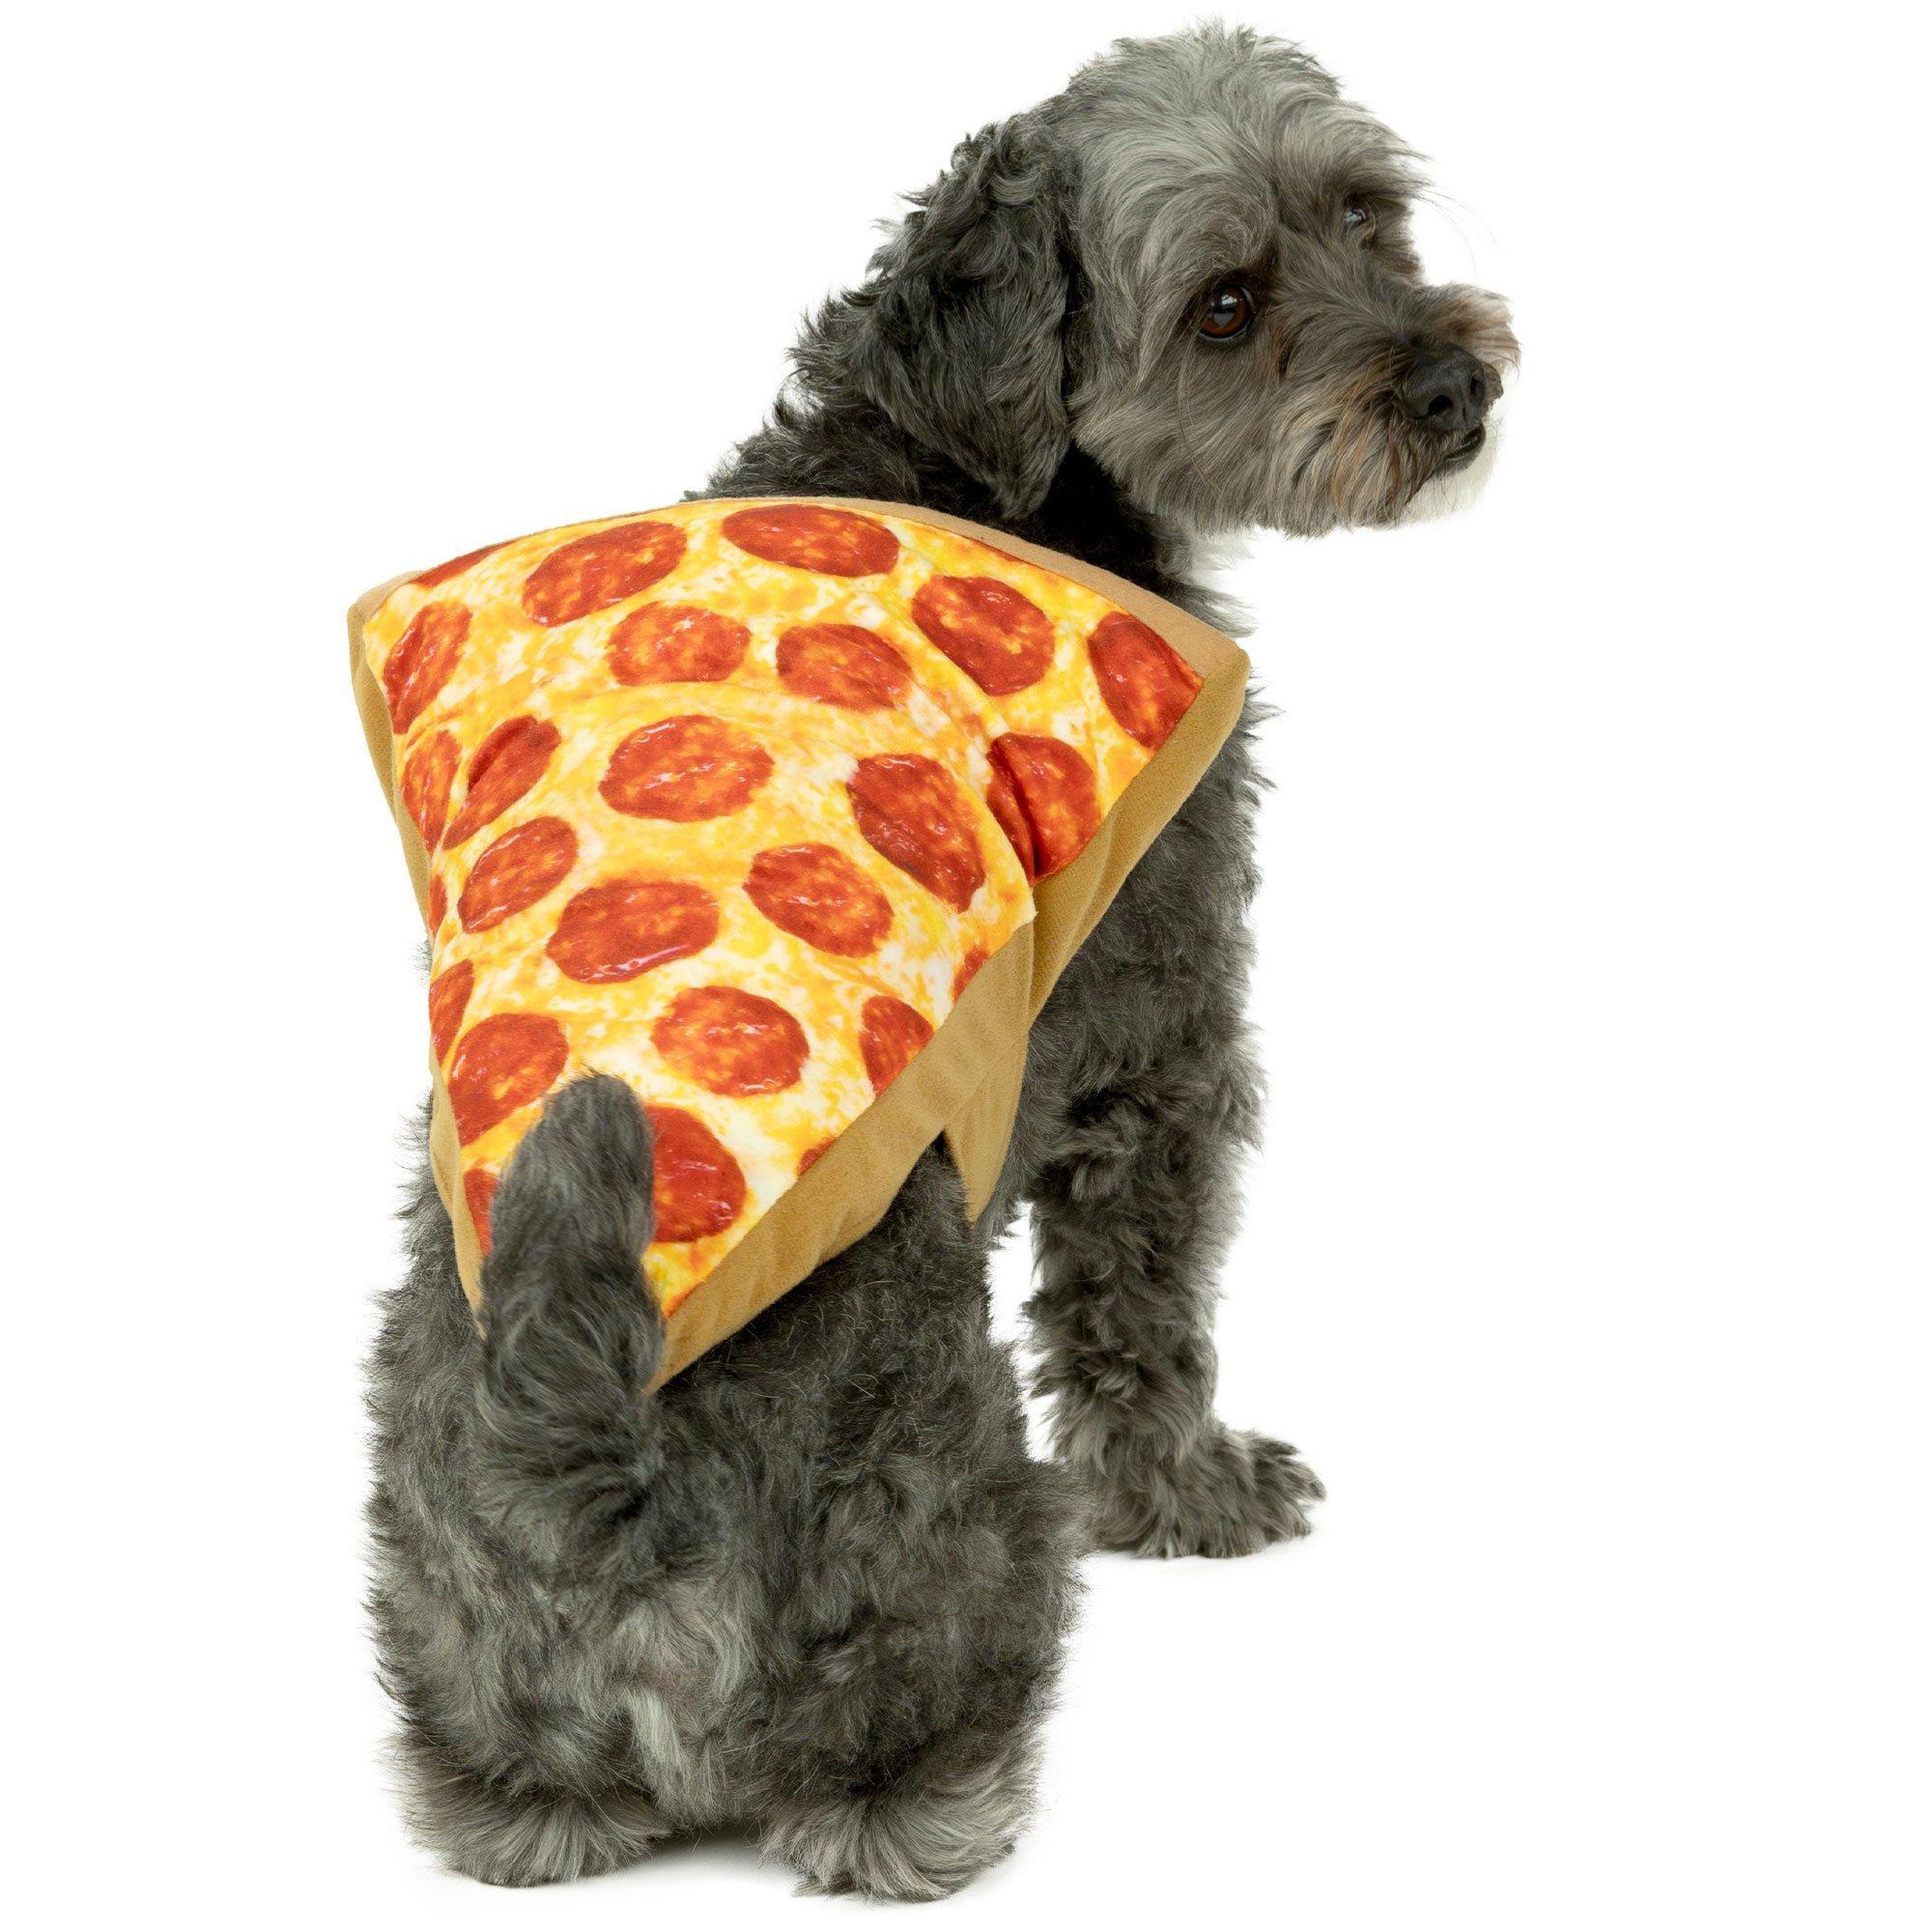 Pepperoni Pizza Slice Dog Costume